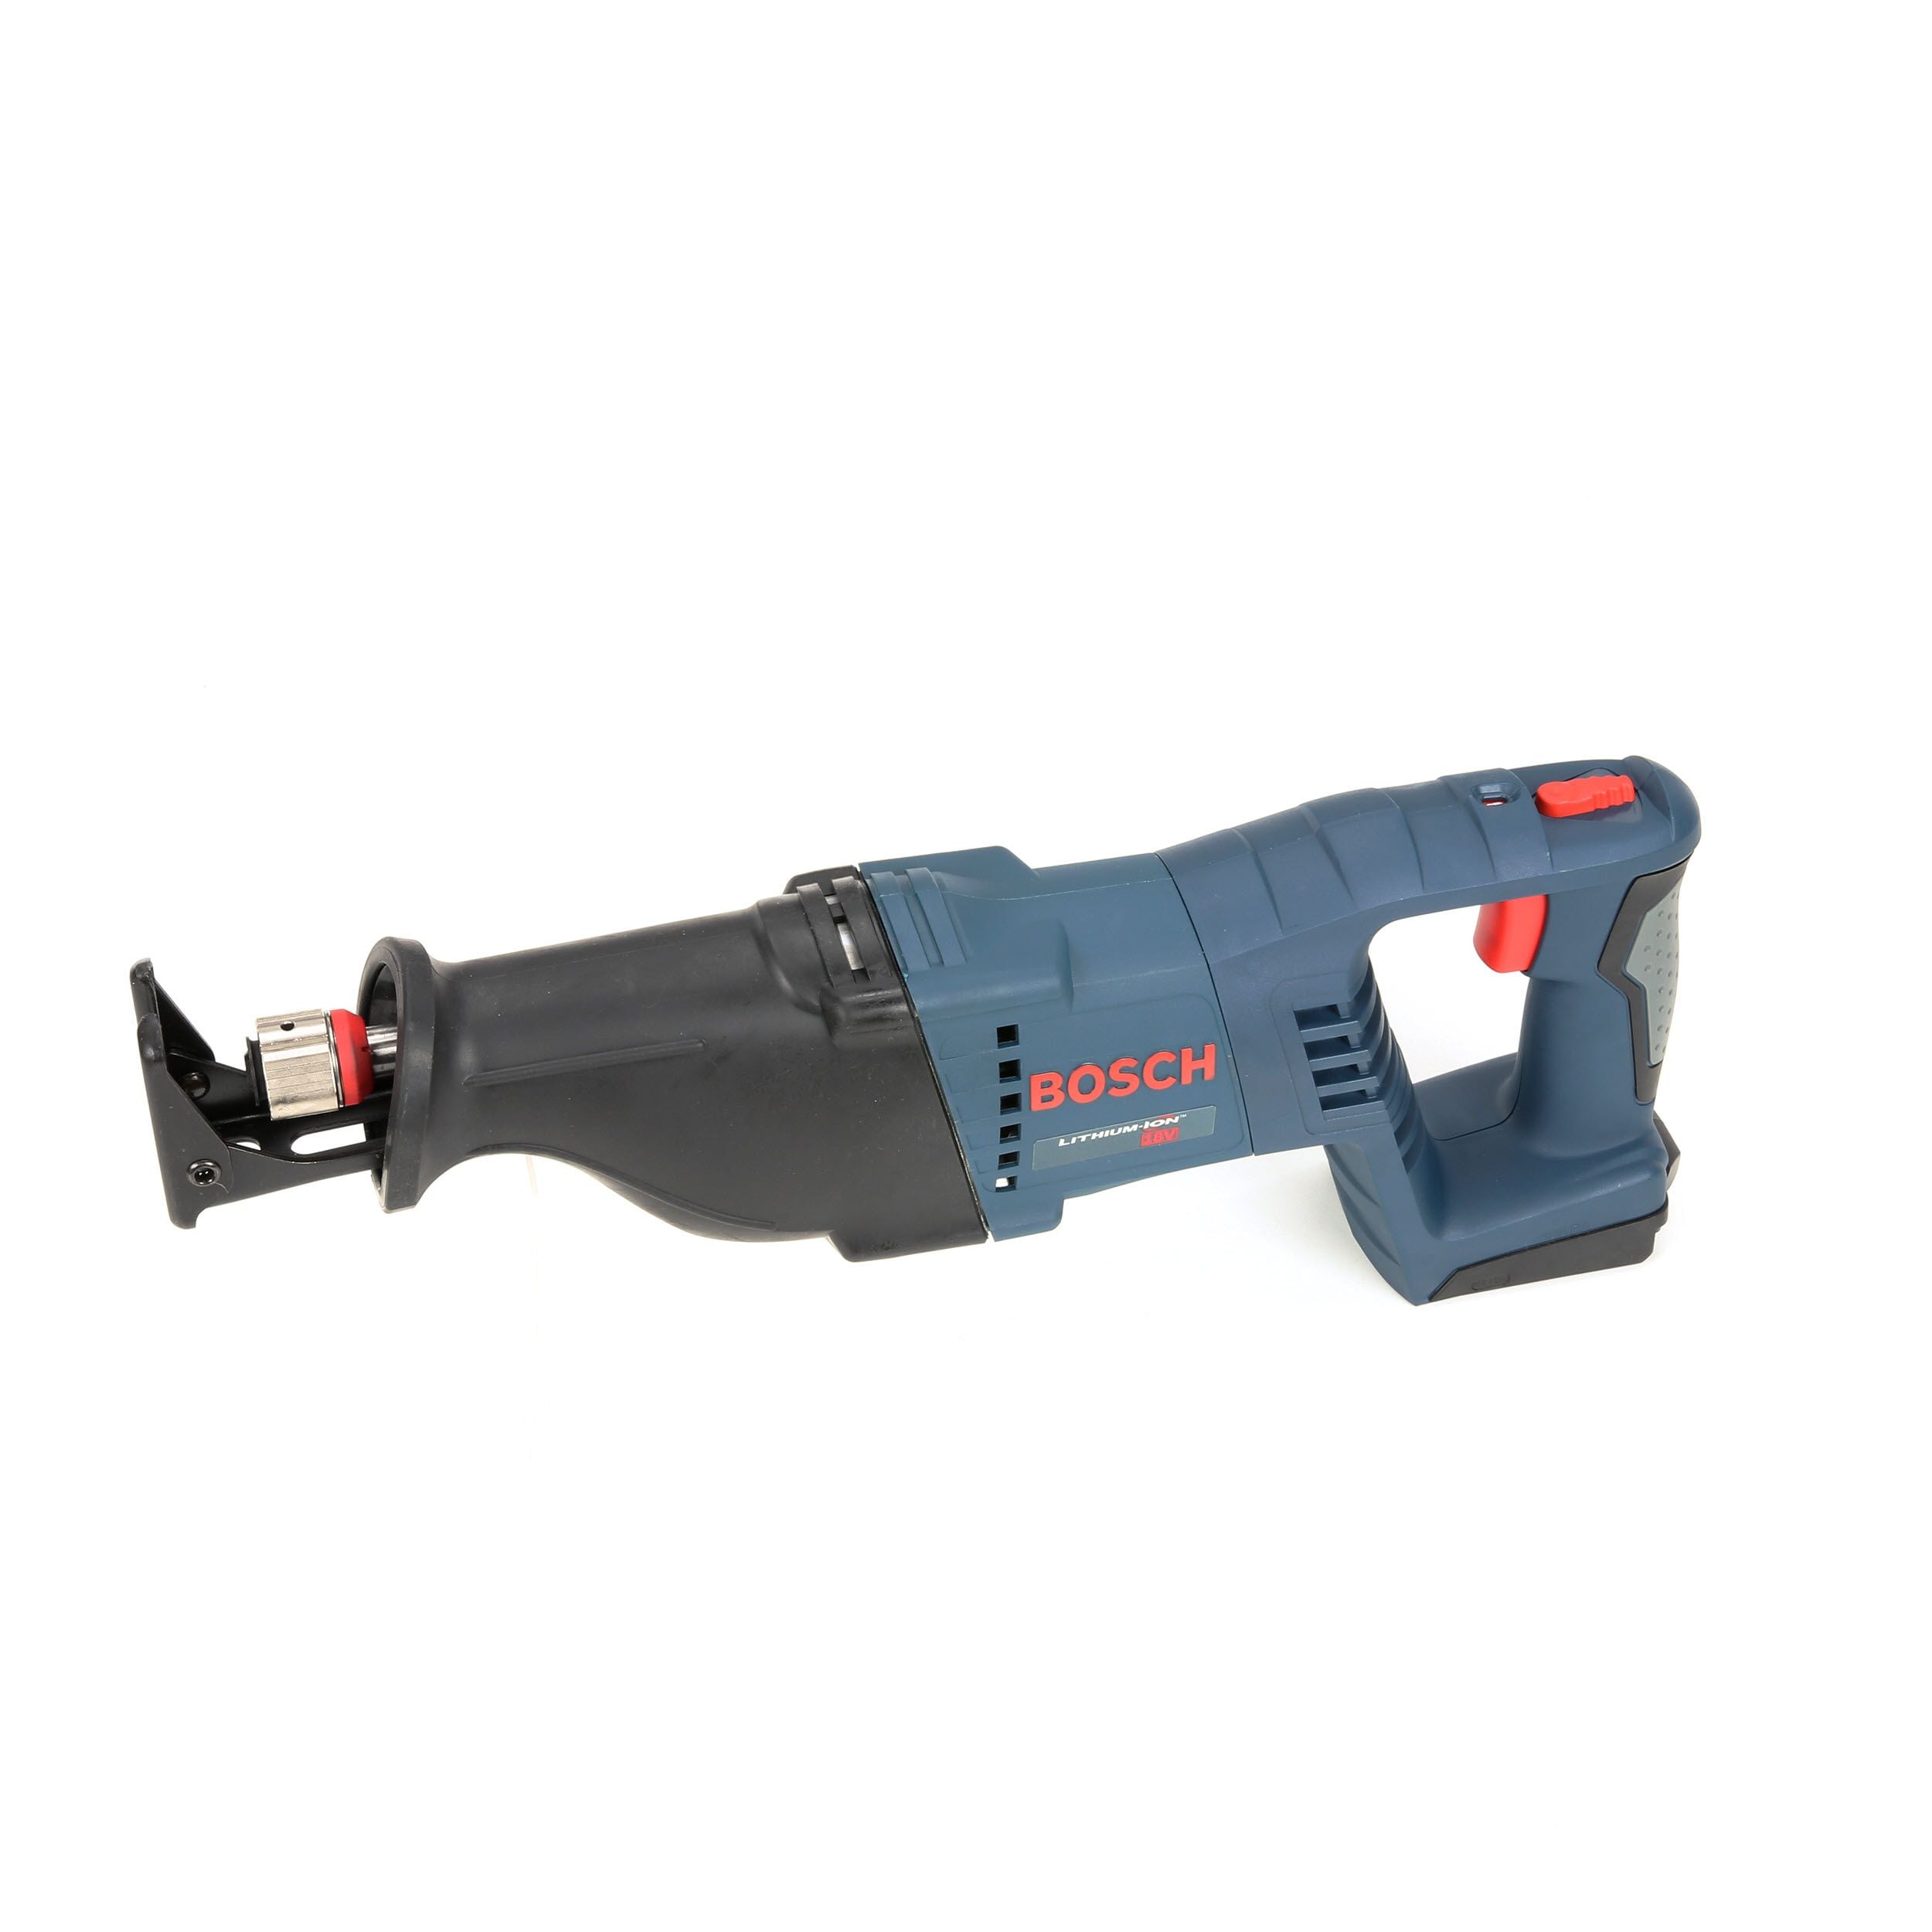 Bosch GSA18V083BRT 18V Cordless Reciprocating Saw for sale online